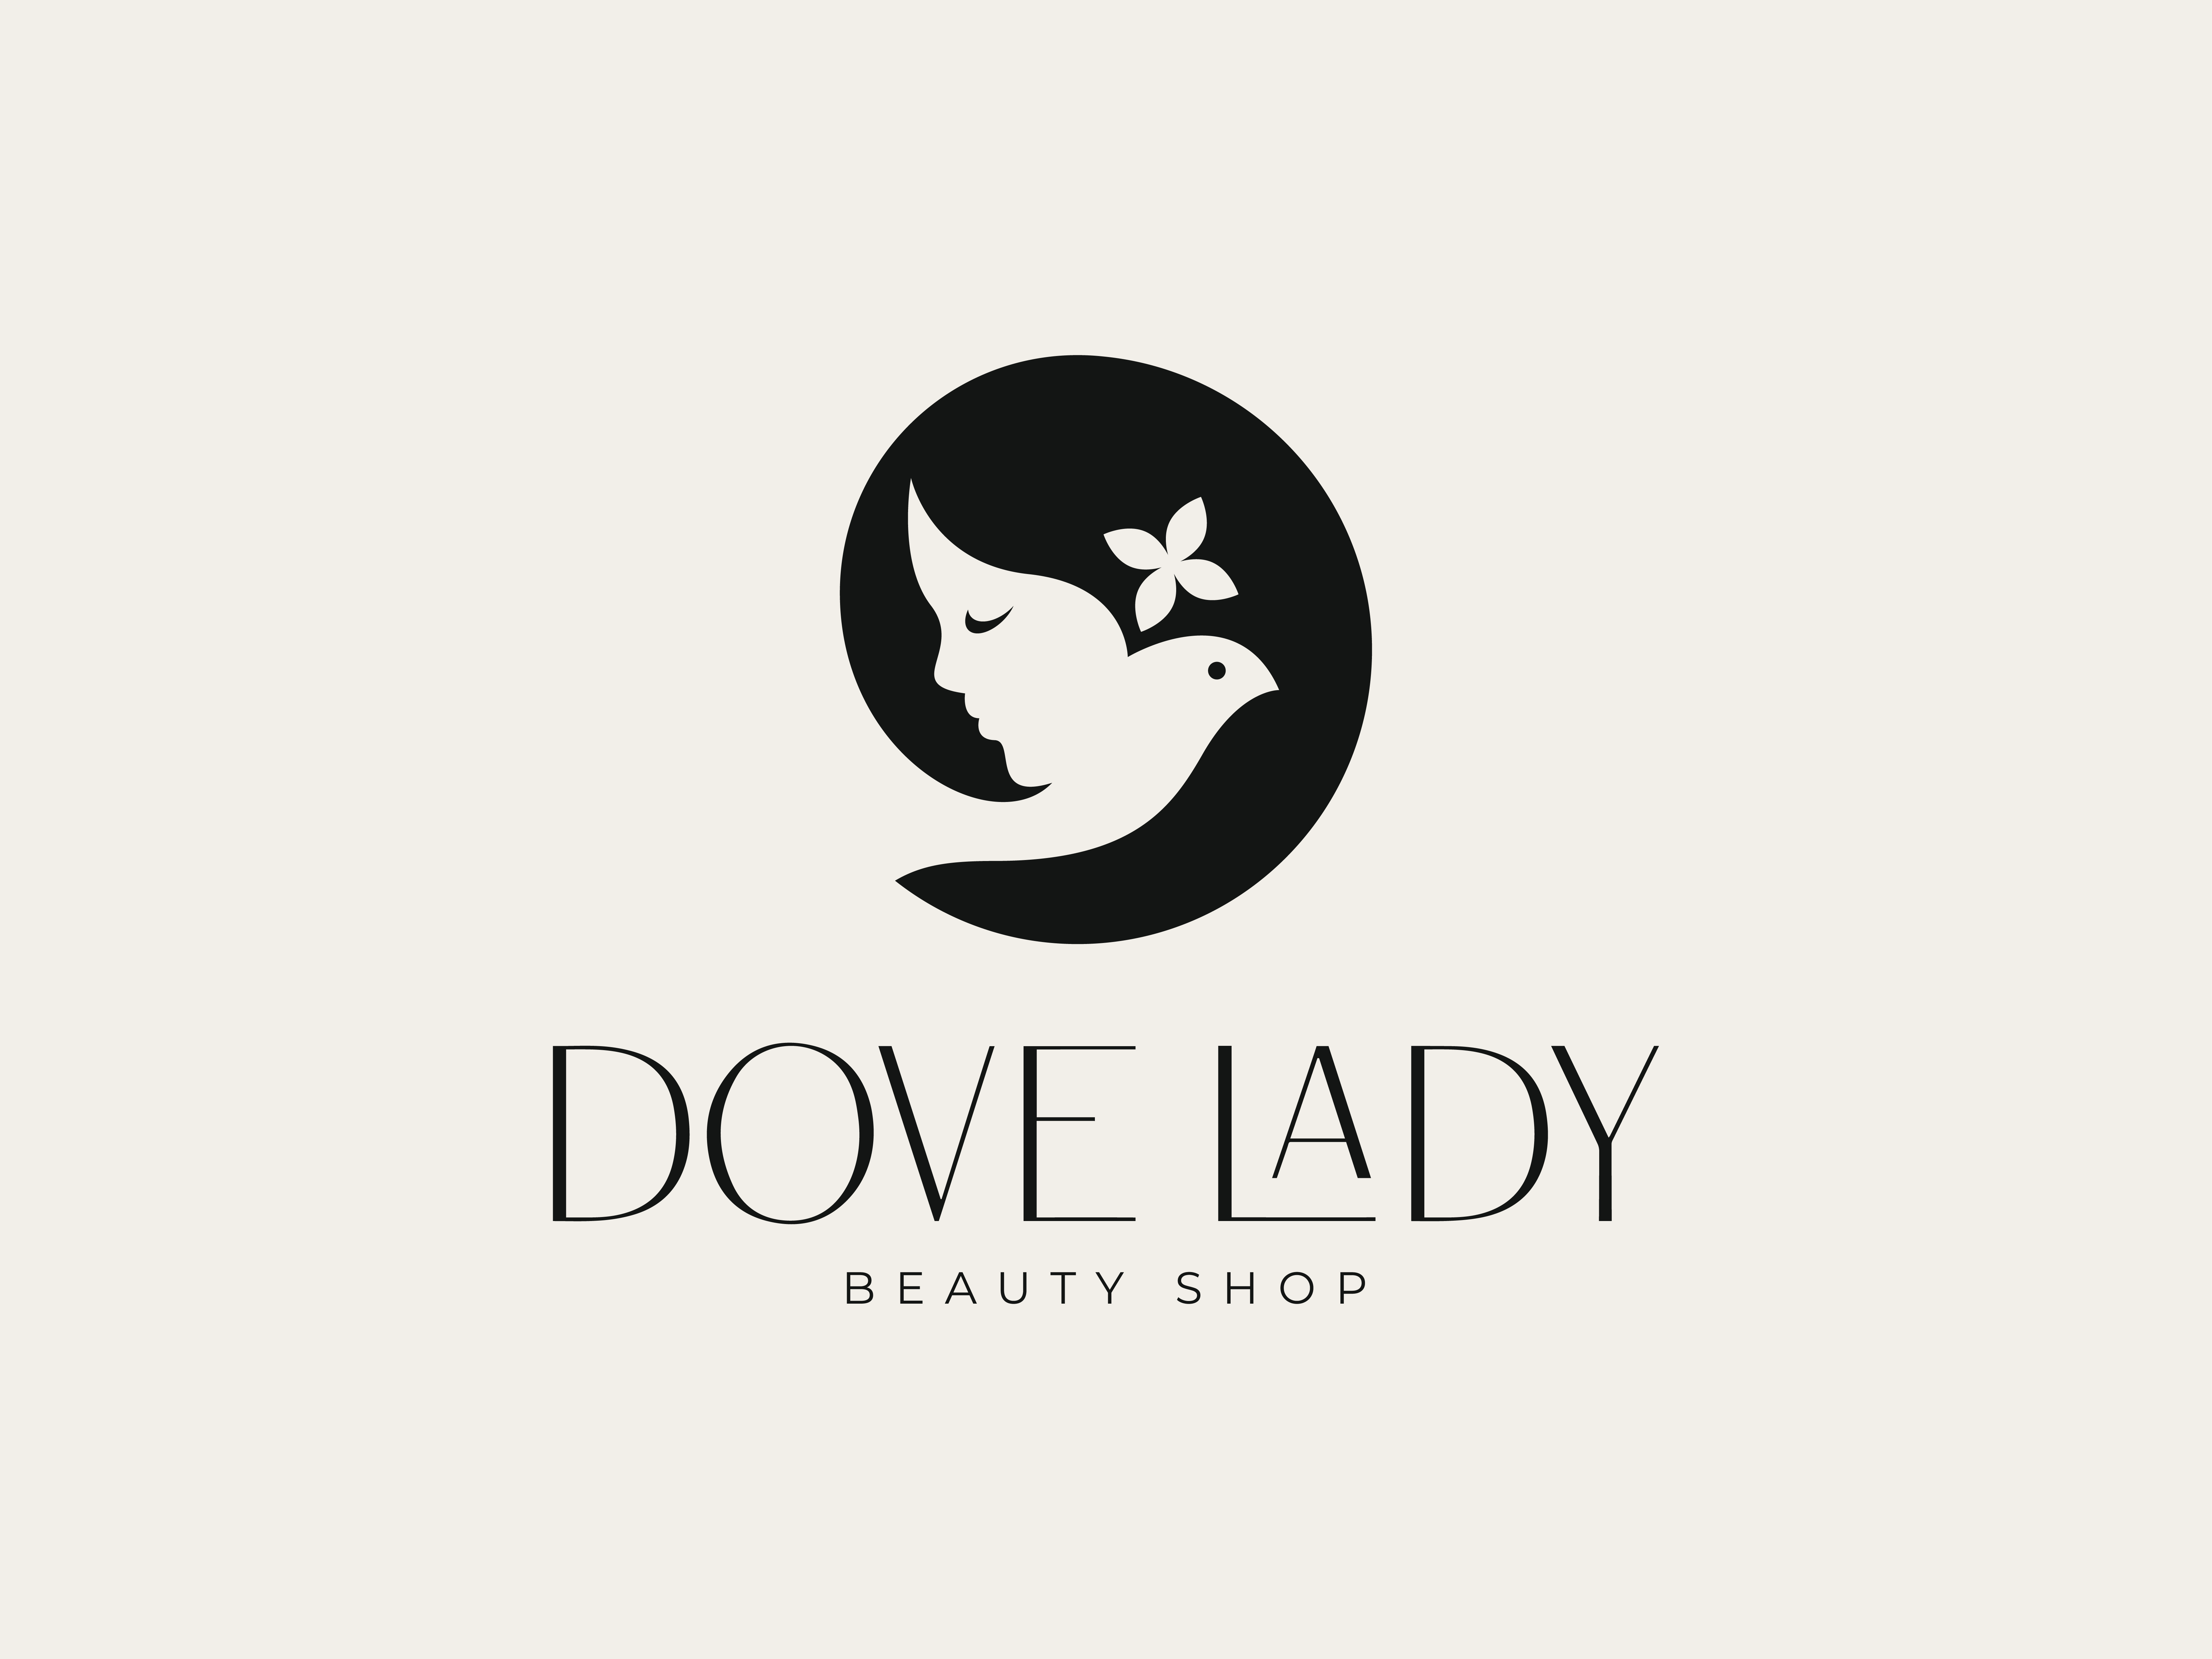 Feminine diva girl hair lady beauty logo Template | PosterMyWall